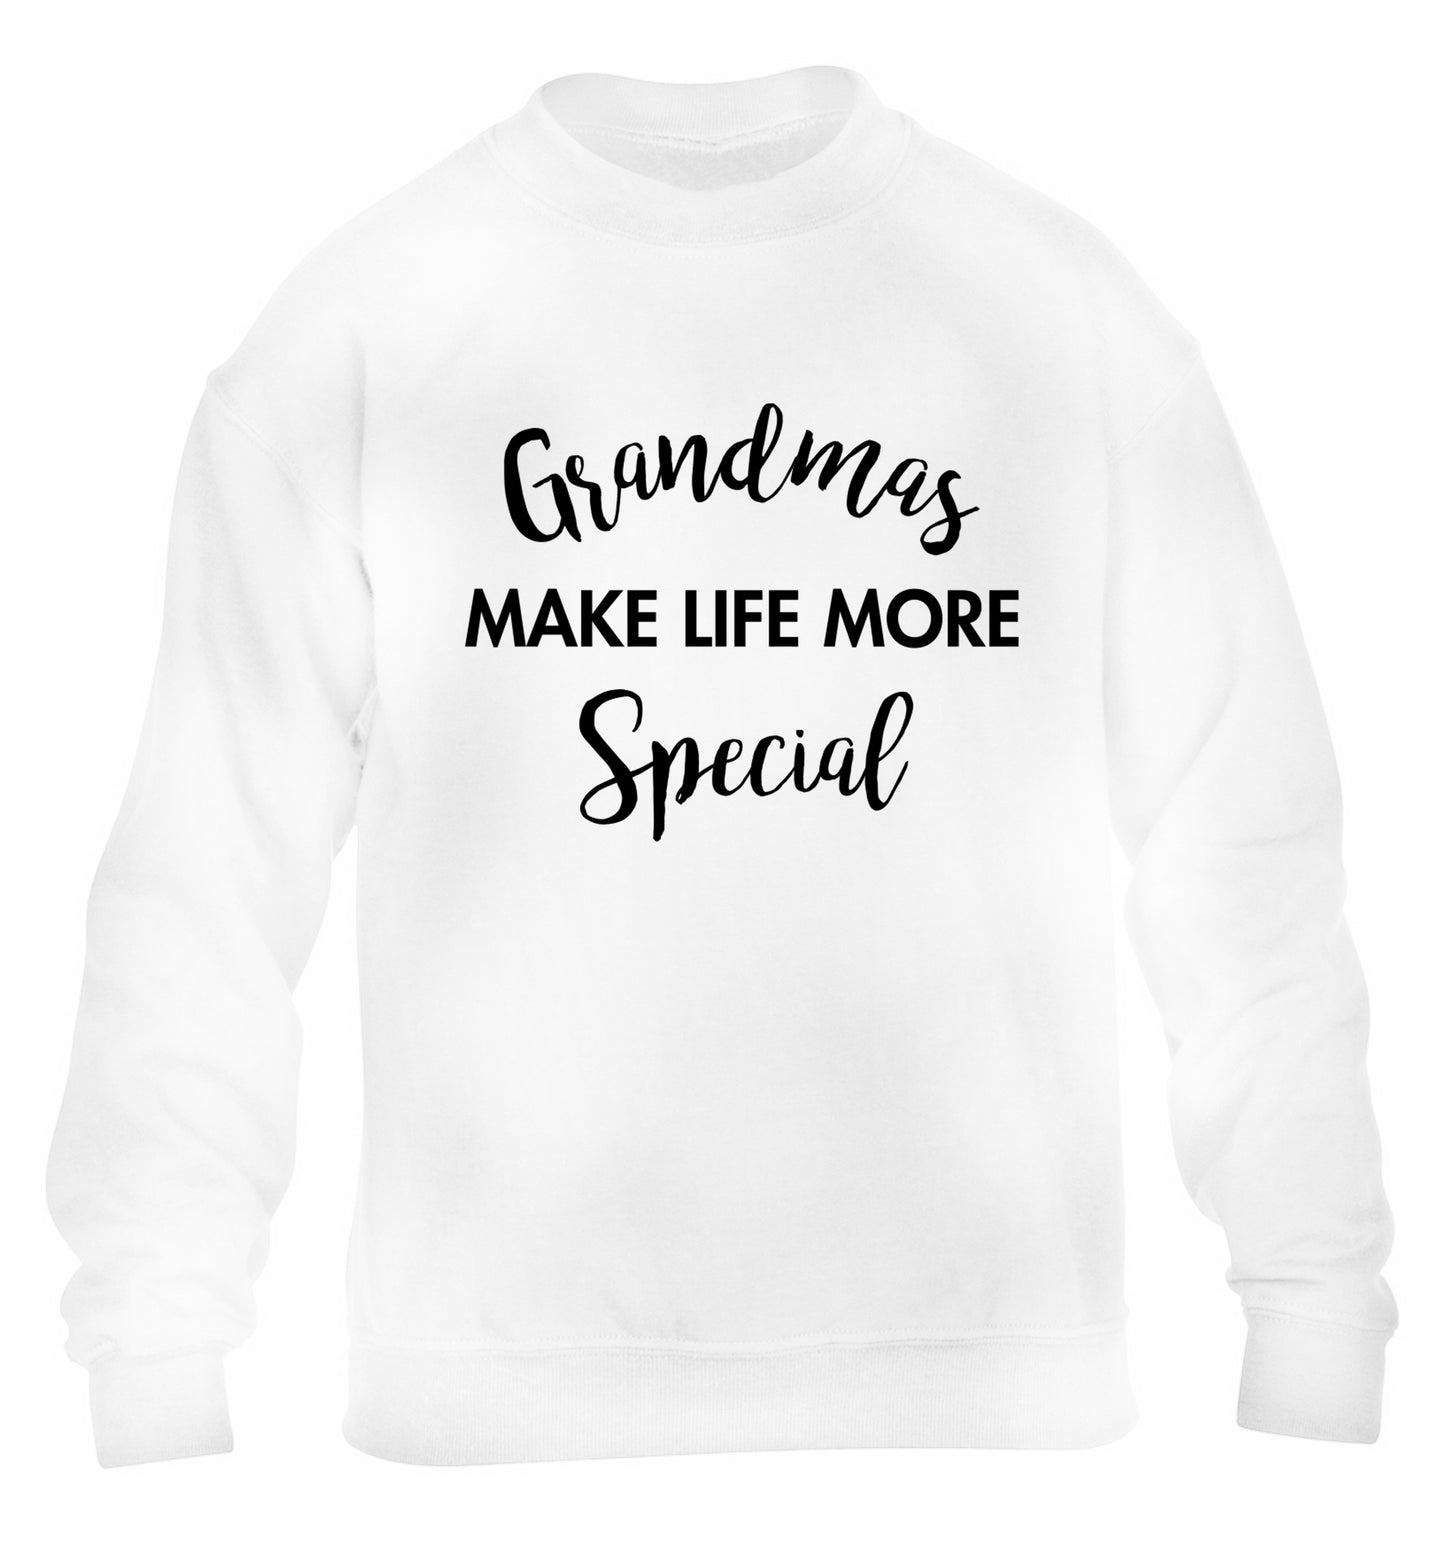 Grandmas make life more special children's white sweater 12-14 Years